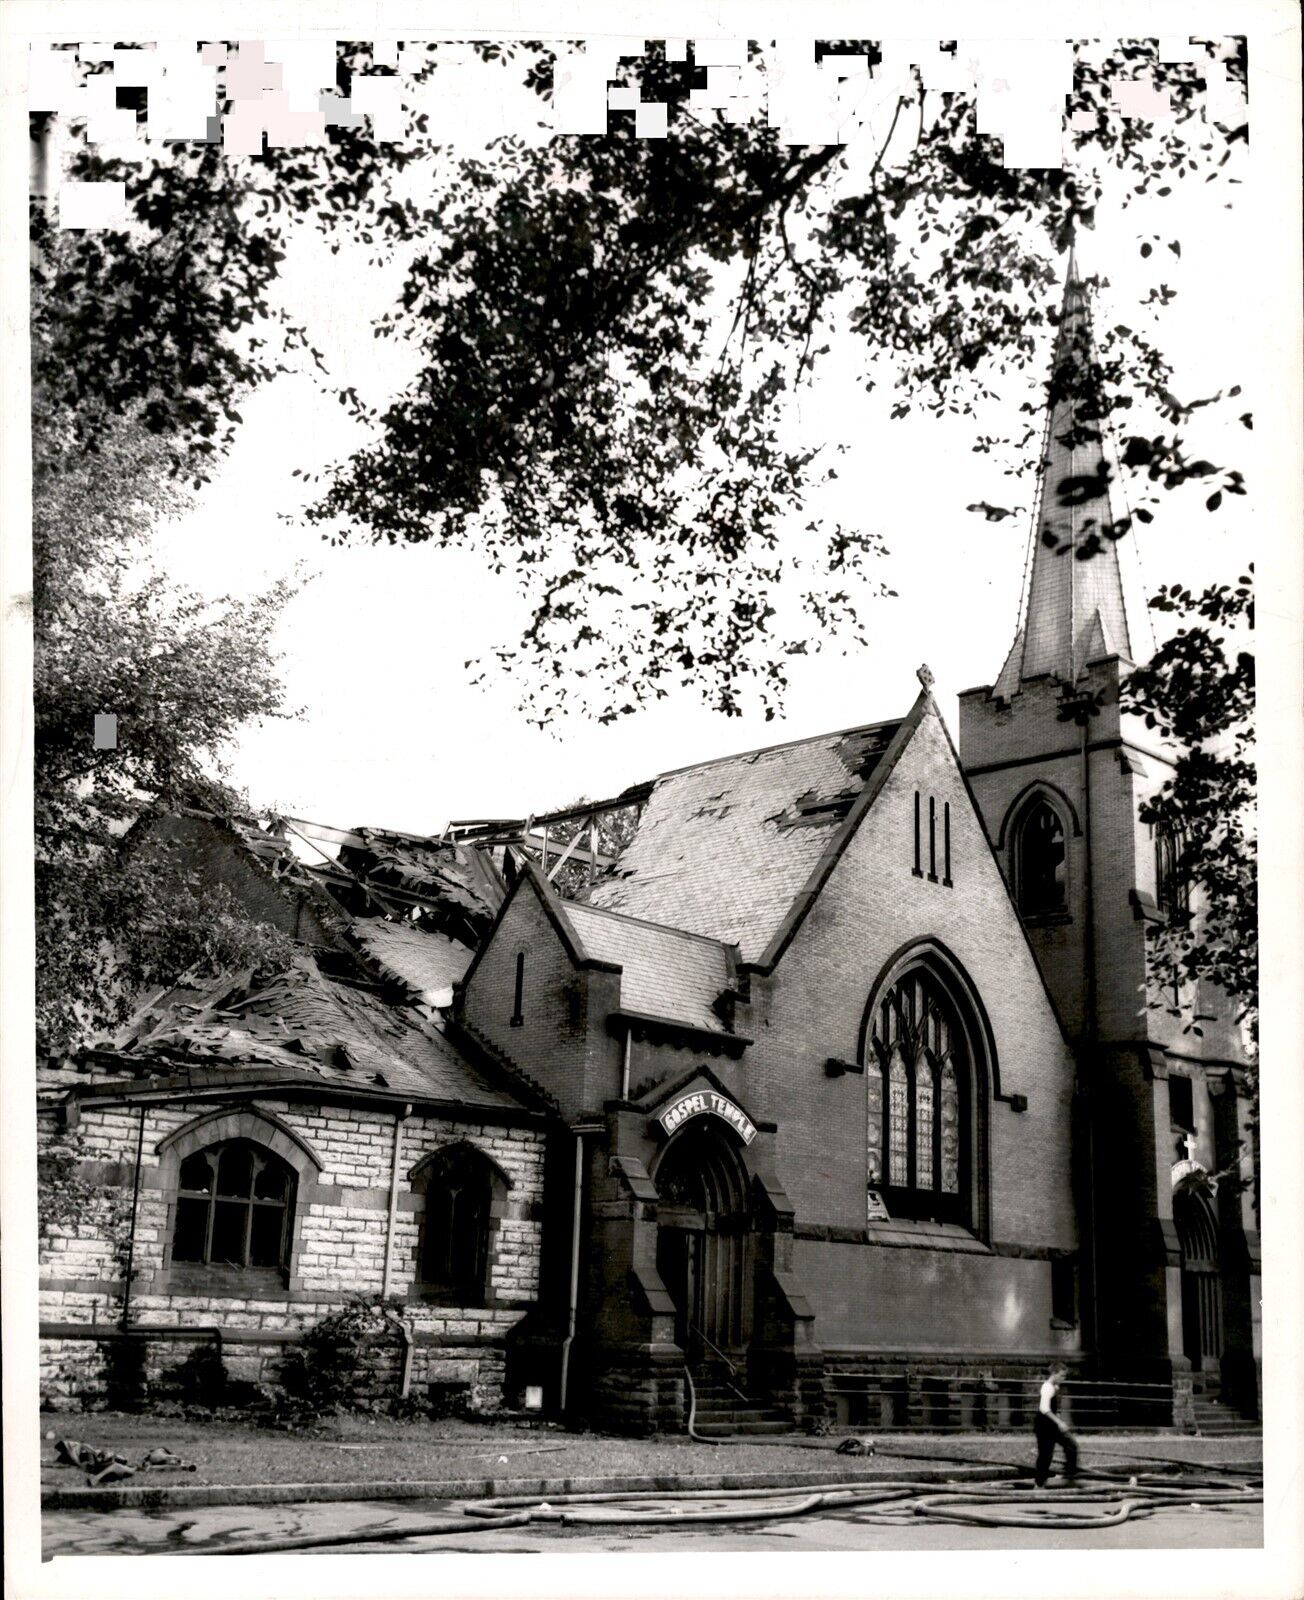 LD276 1952 Original Photo PARK CONGREGATIONAL CHURCH DESTROYED IN ST PAUL FIRE